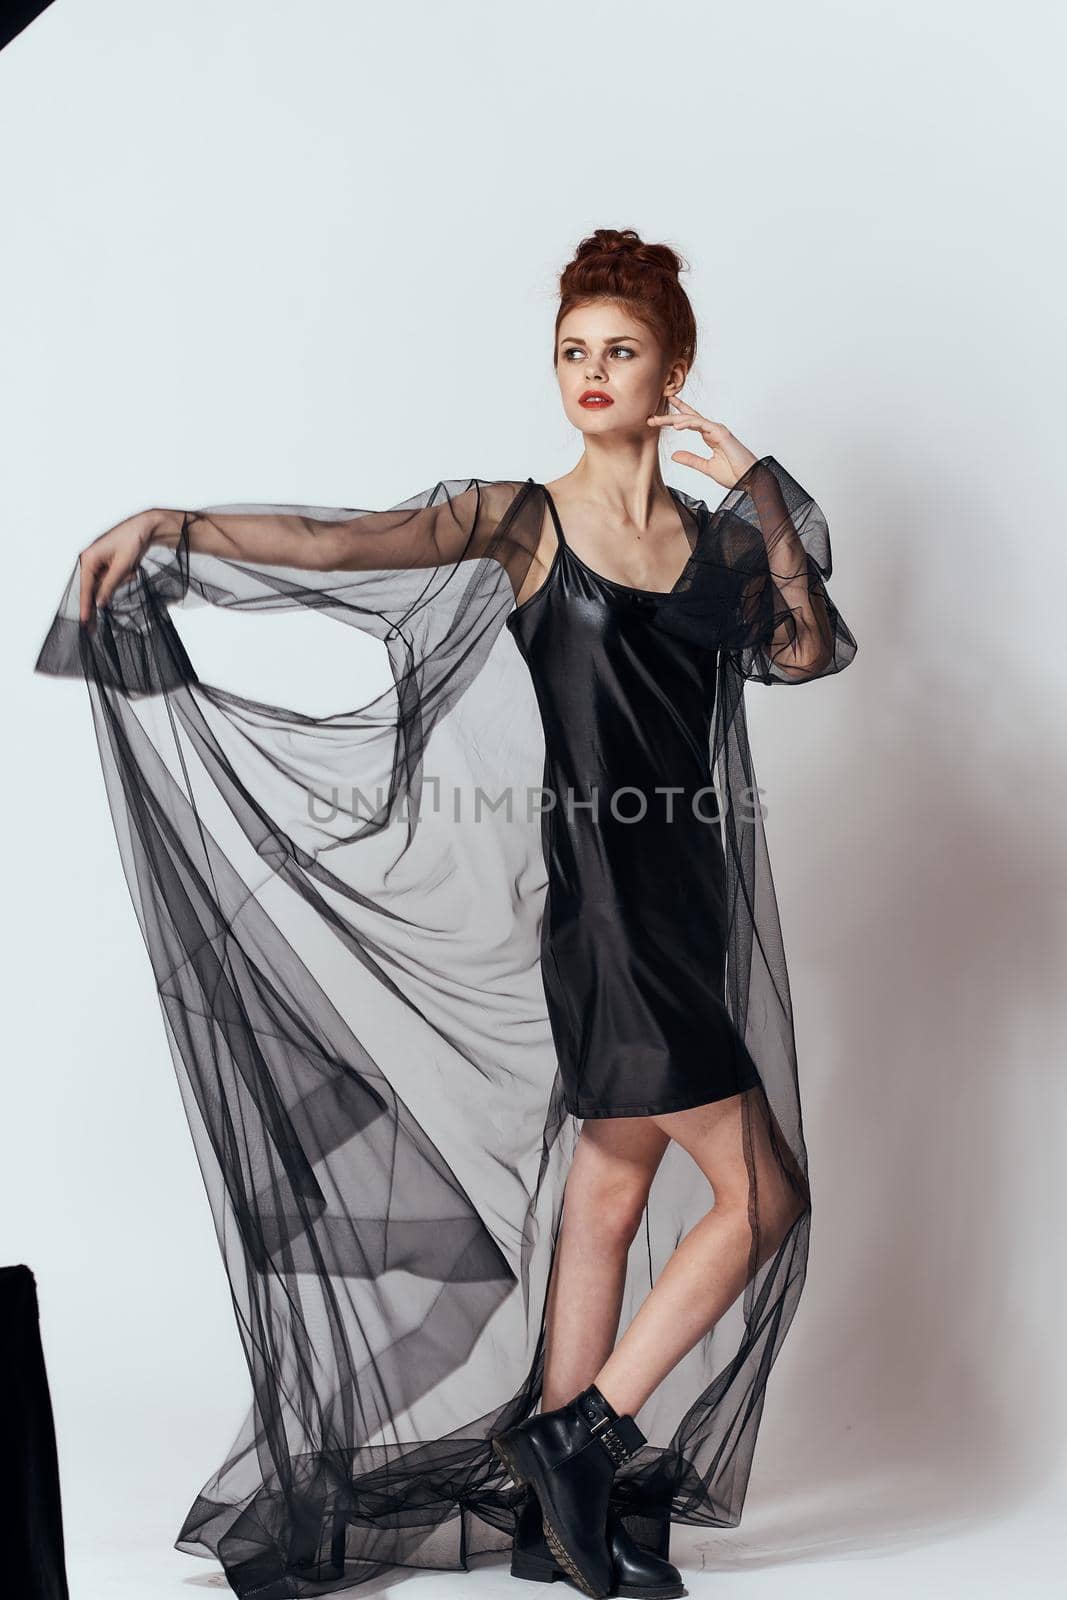 woman in black dress posing fashion glamor studio by Vichizh